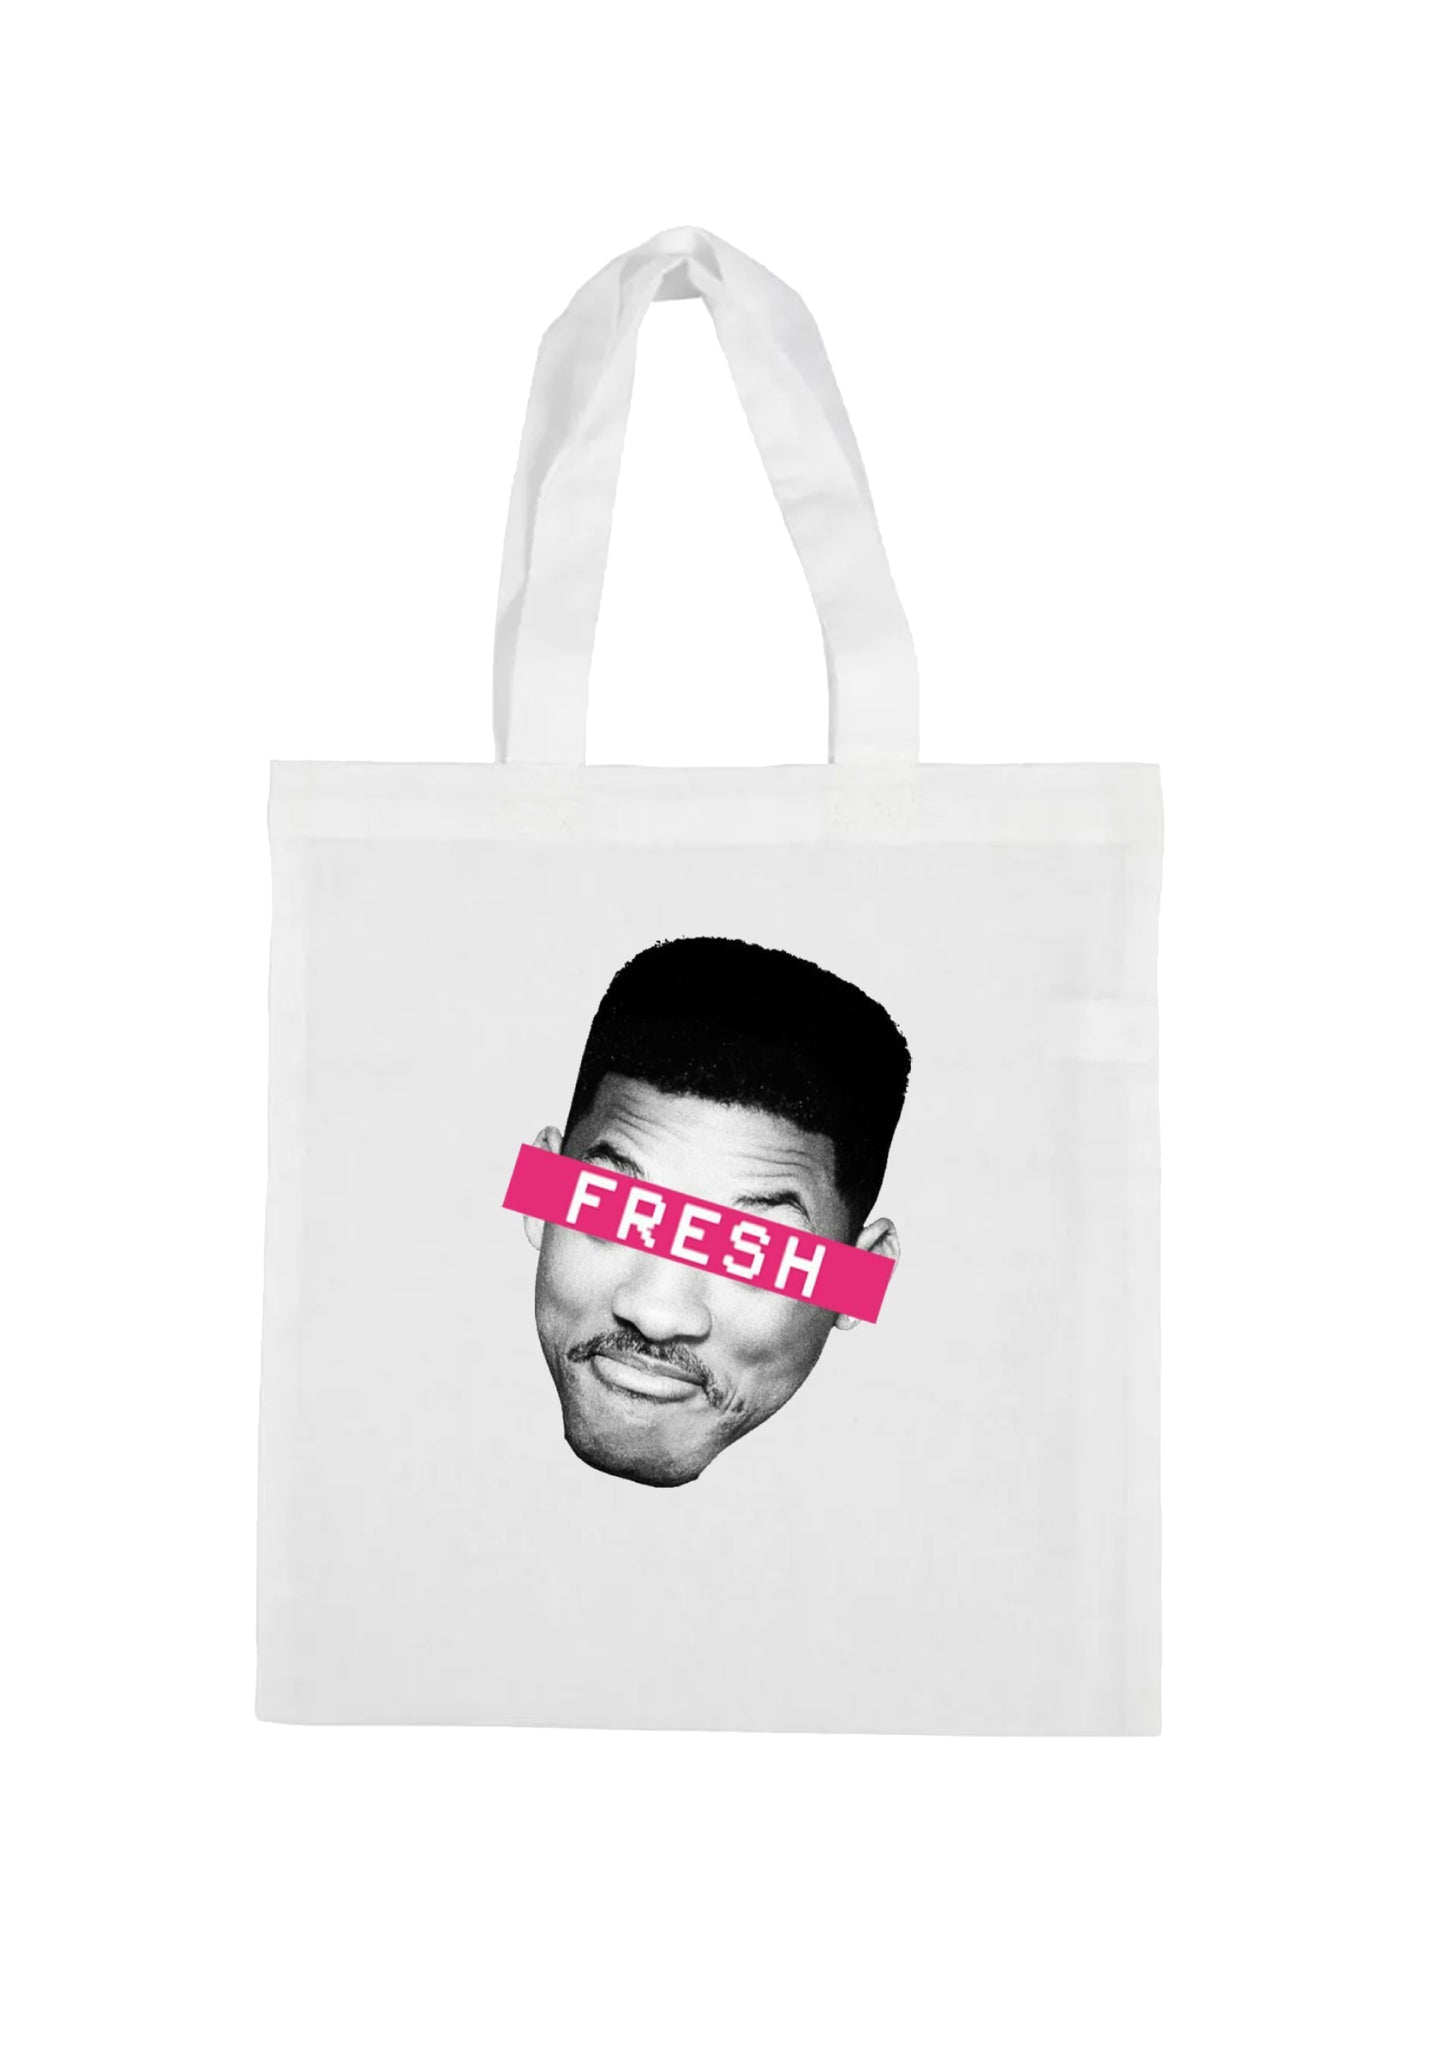 shopping bag - Willy fresh